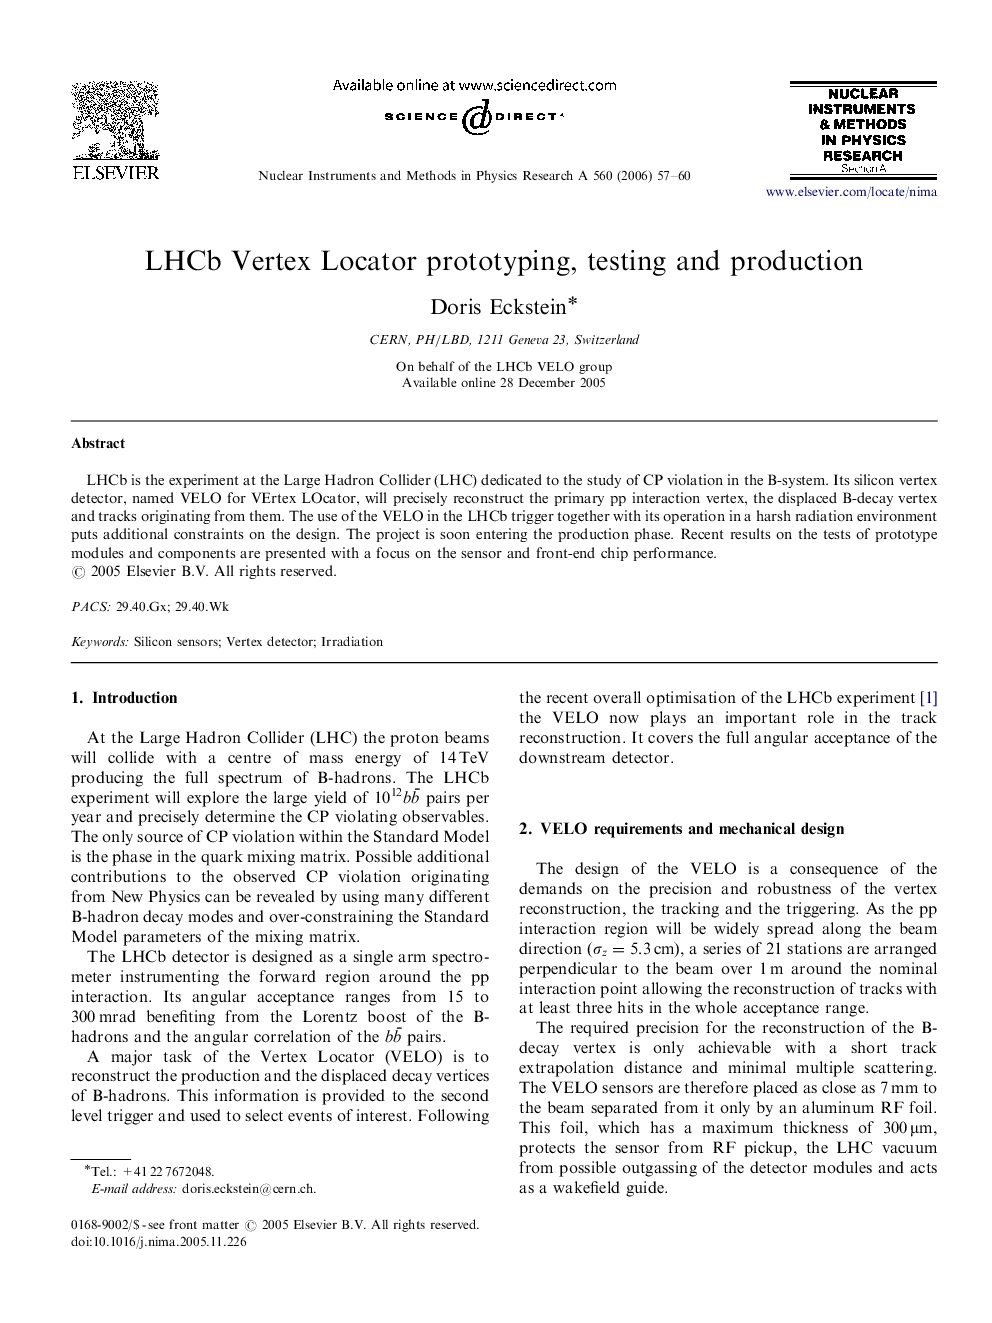 LHCb Vertex Locator prototyping, testing and production